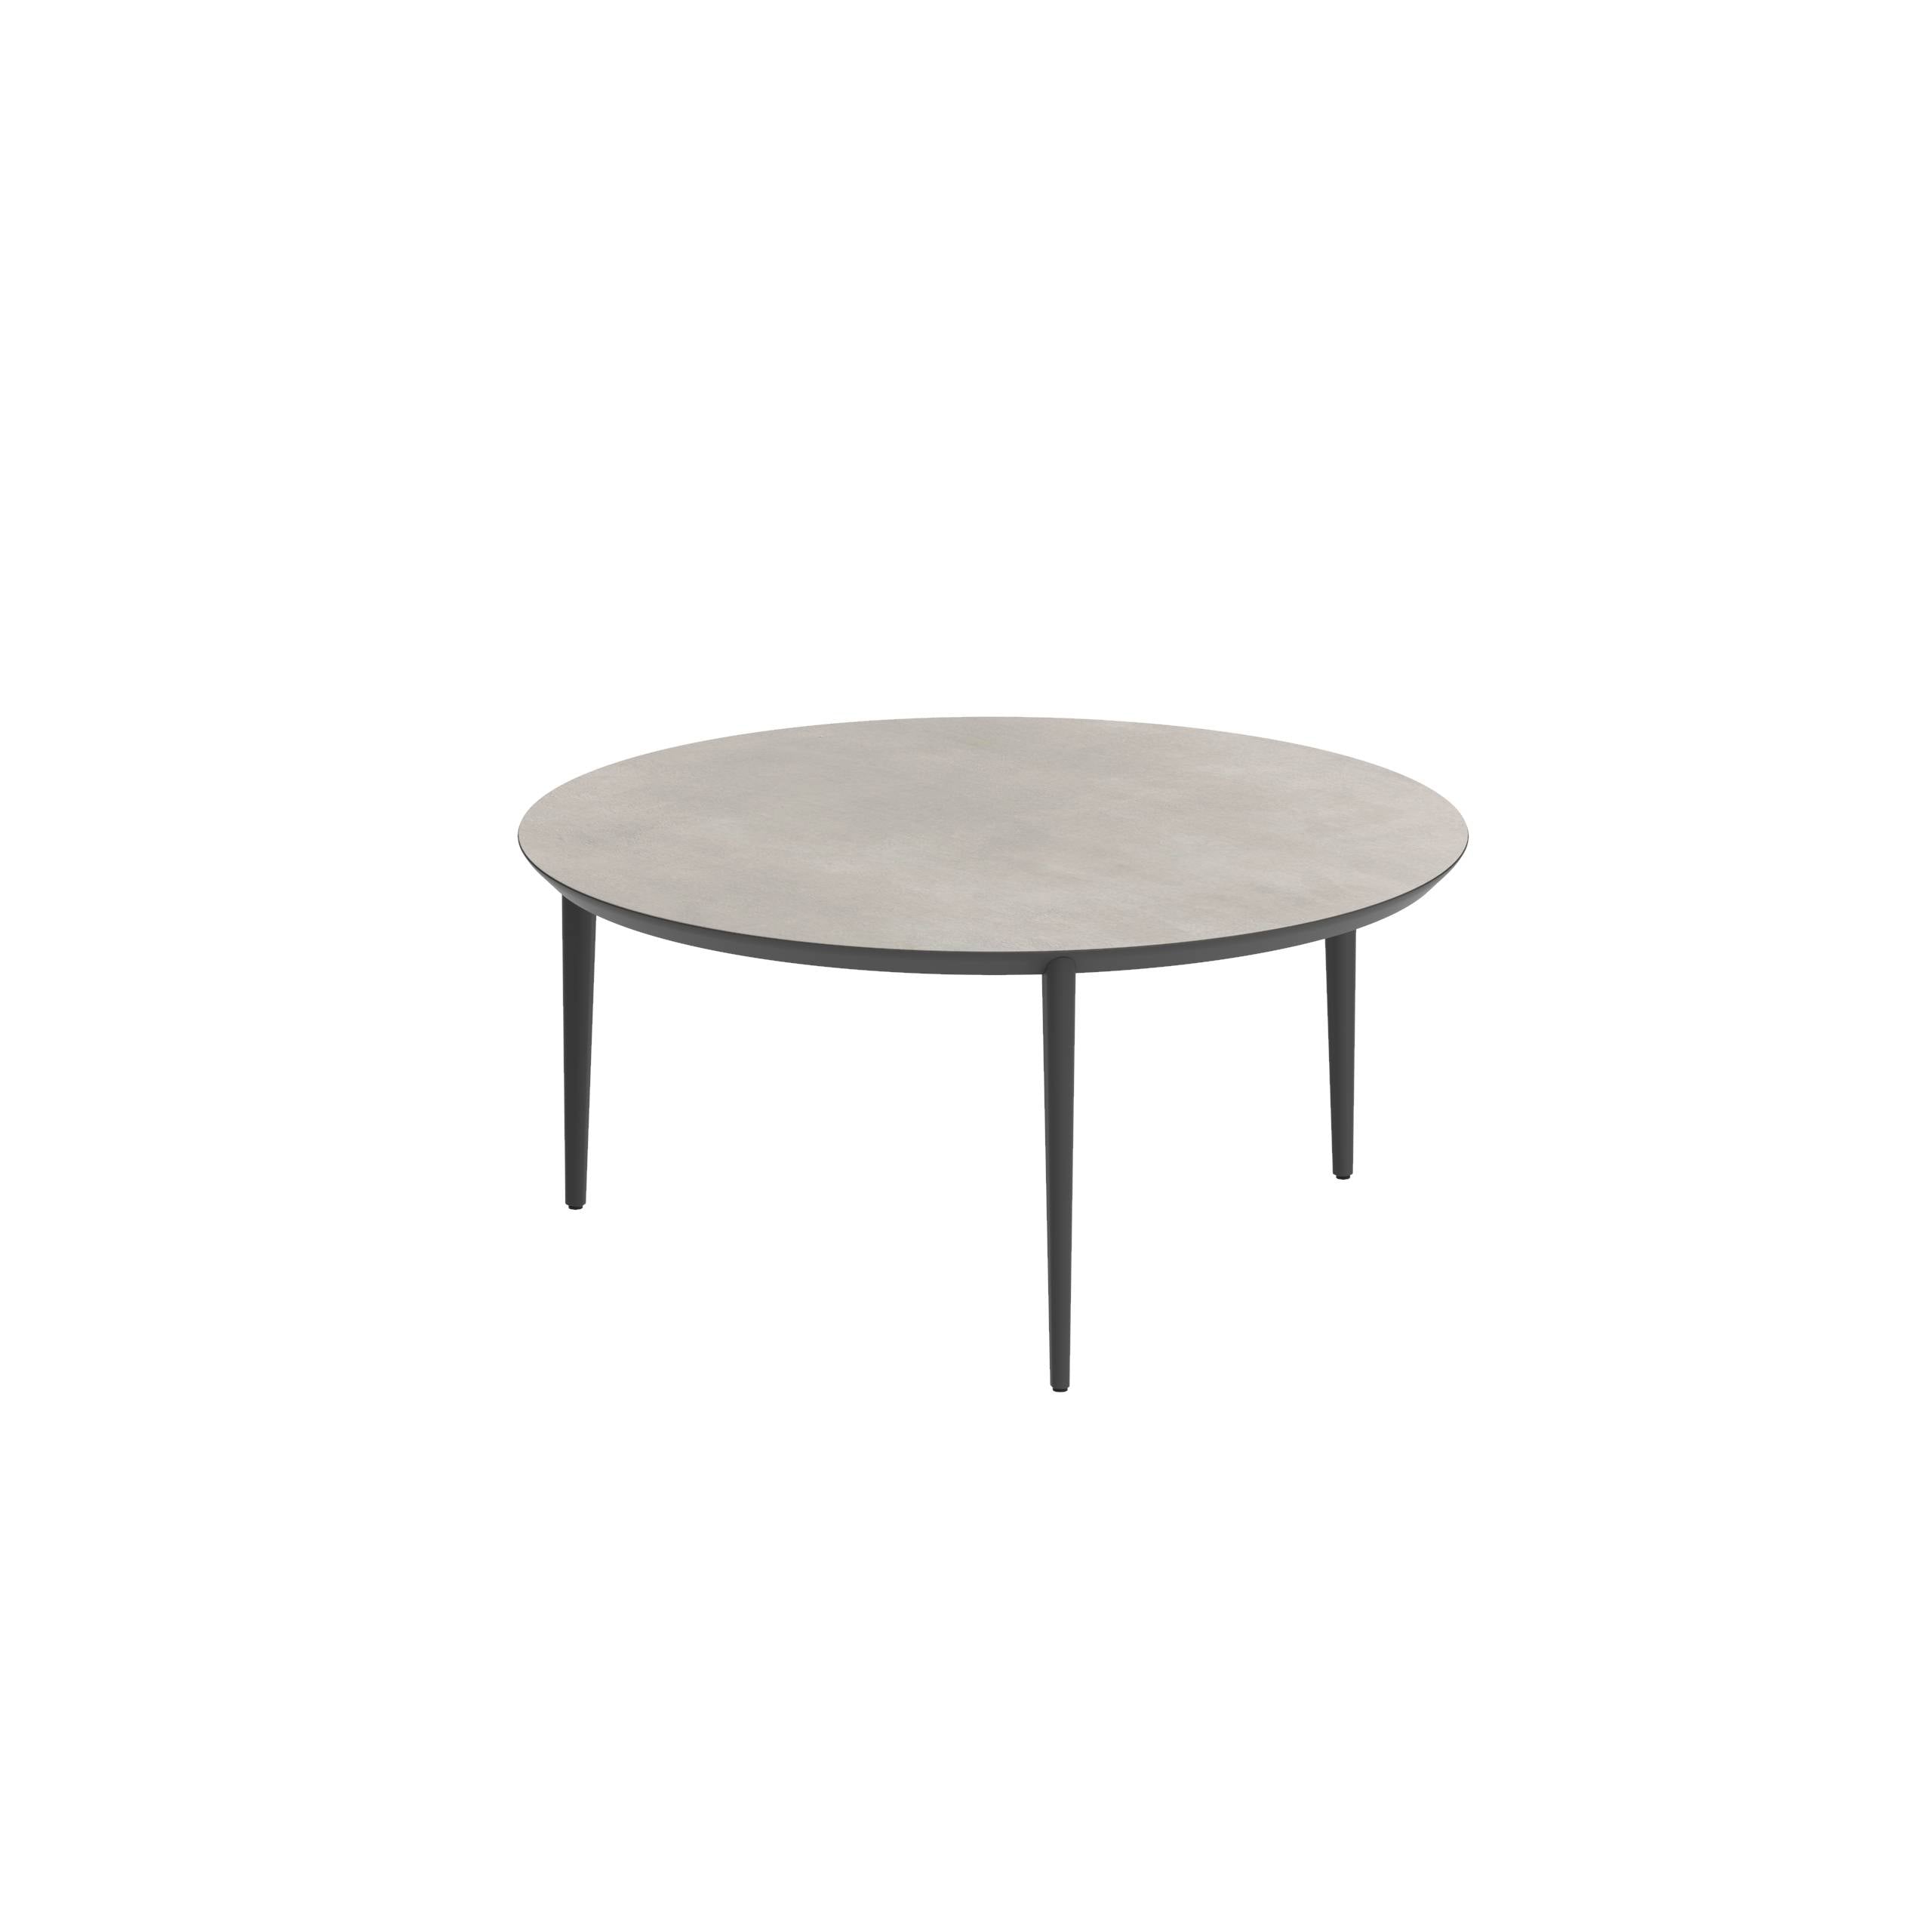 U-Nite Table Round Ø 160cm Alu Legs Anthracite - Table Top Ceramic Cemento Luminoso